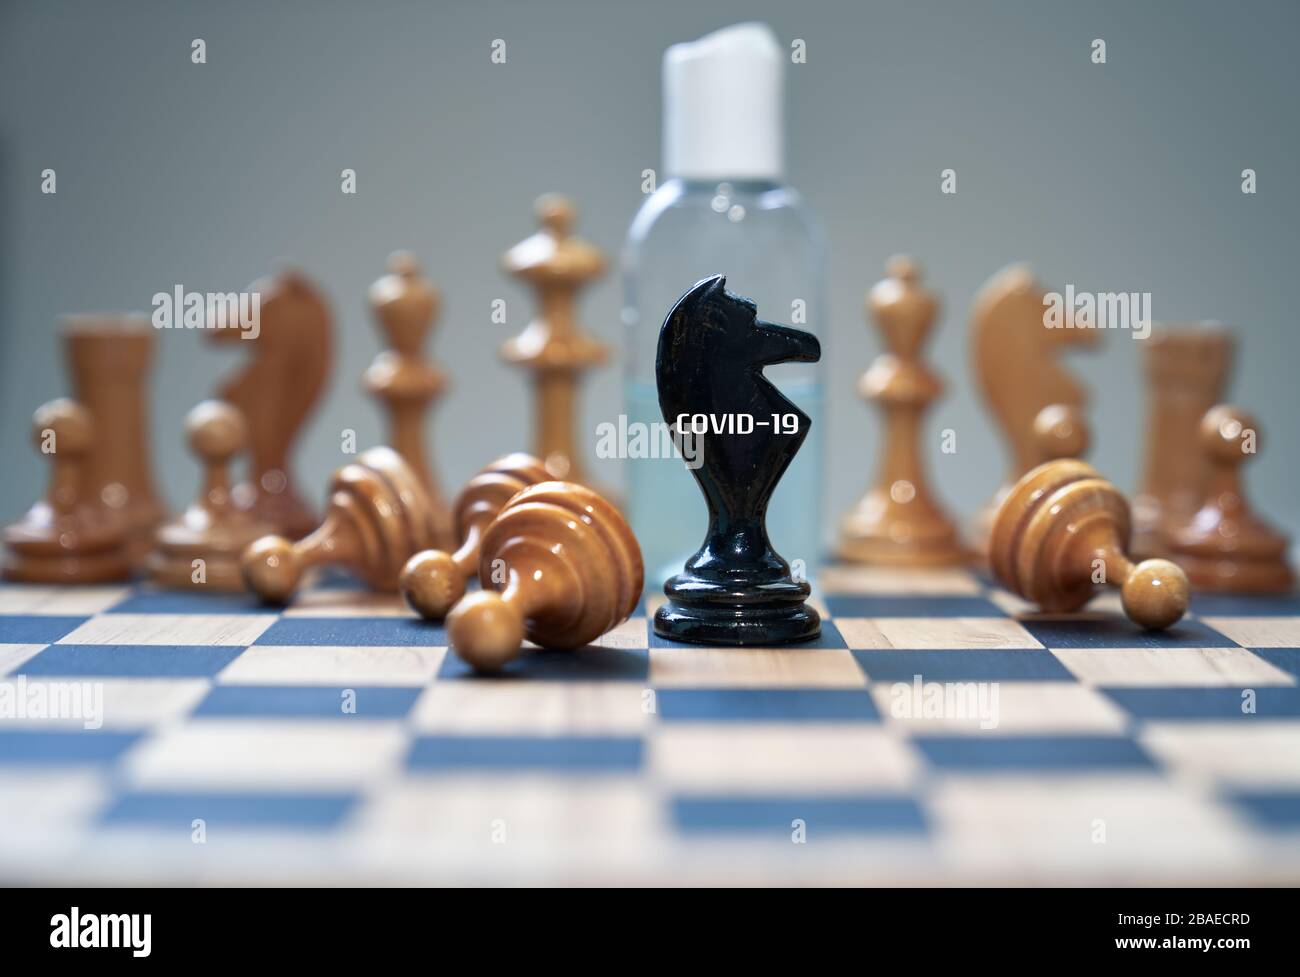 Hand Man Taking Chess Piece Make Next Move Chess Game Stock Photo by  ©guruxox 640426472